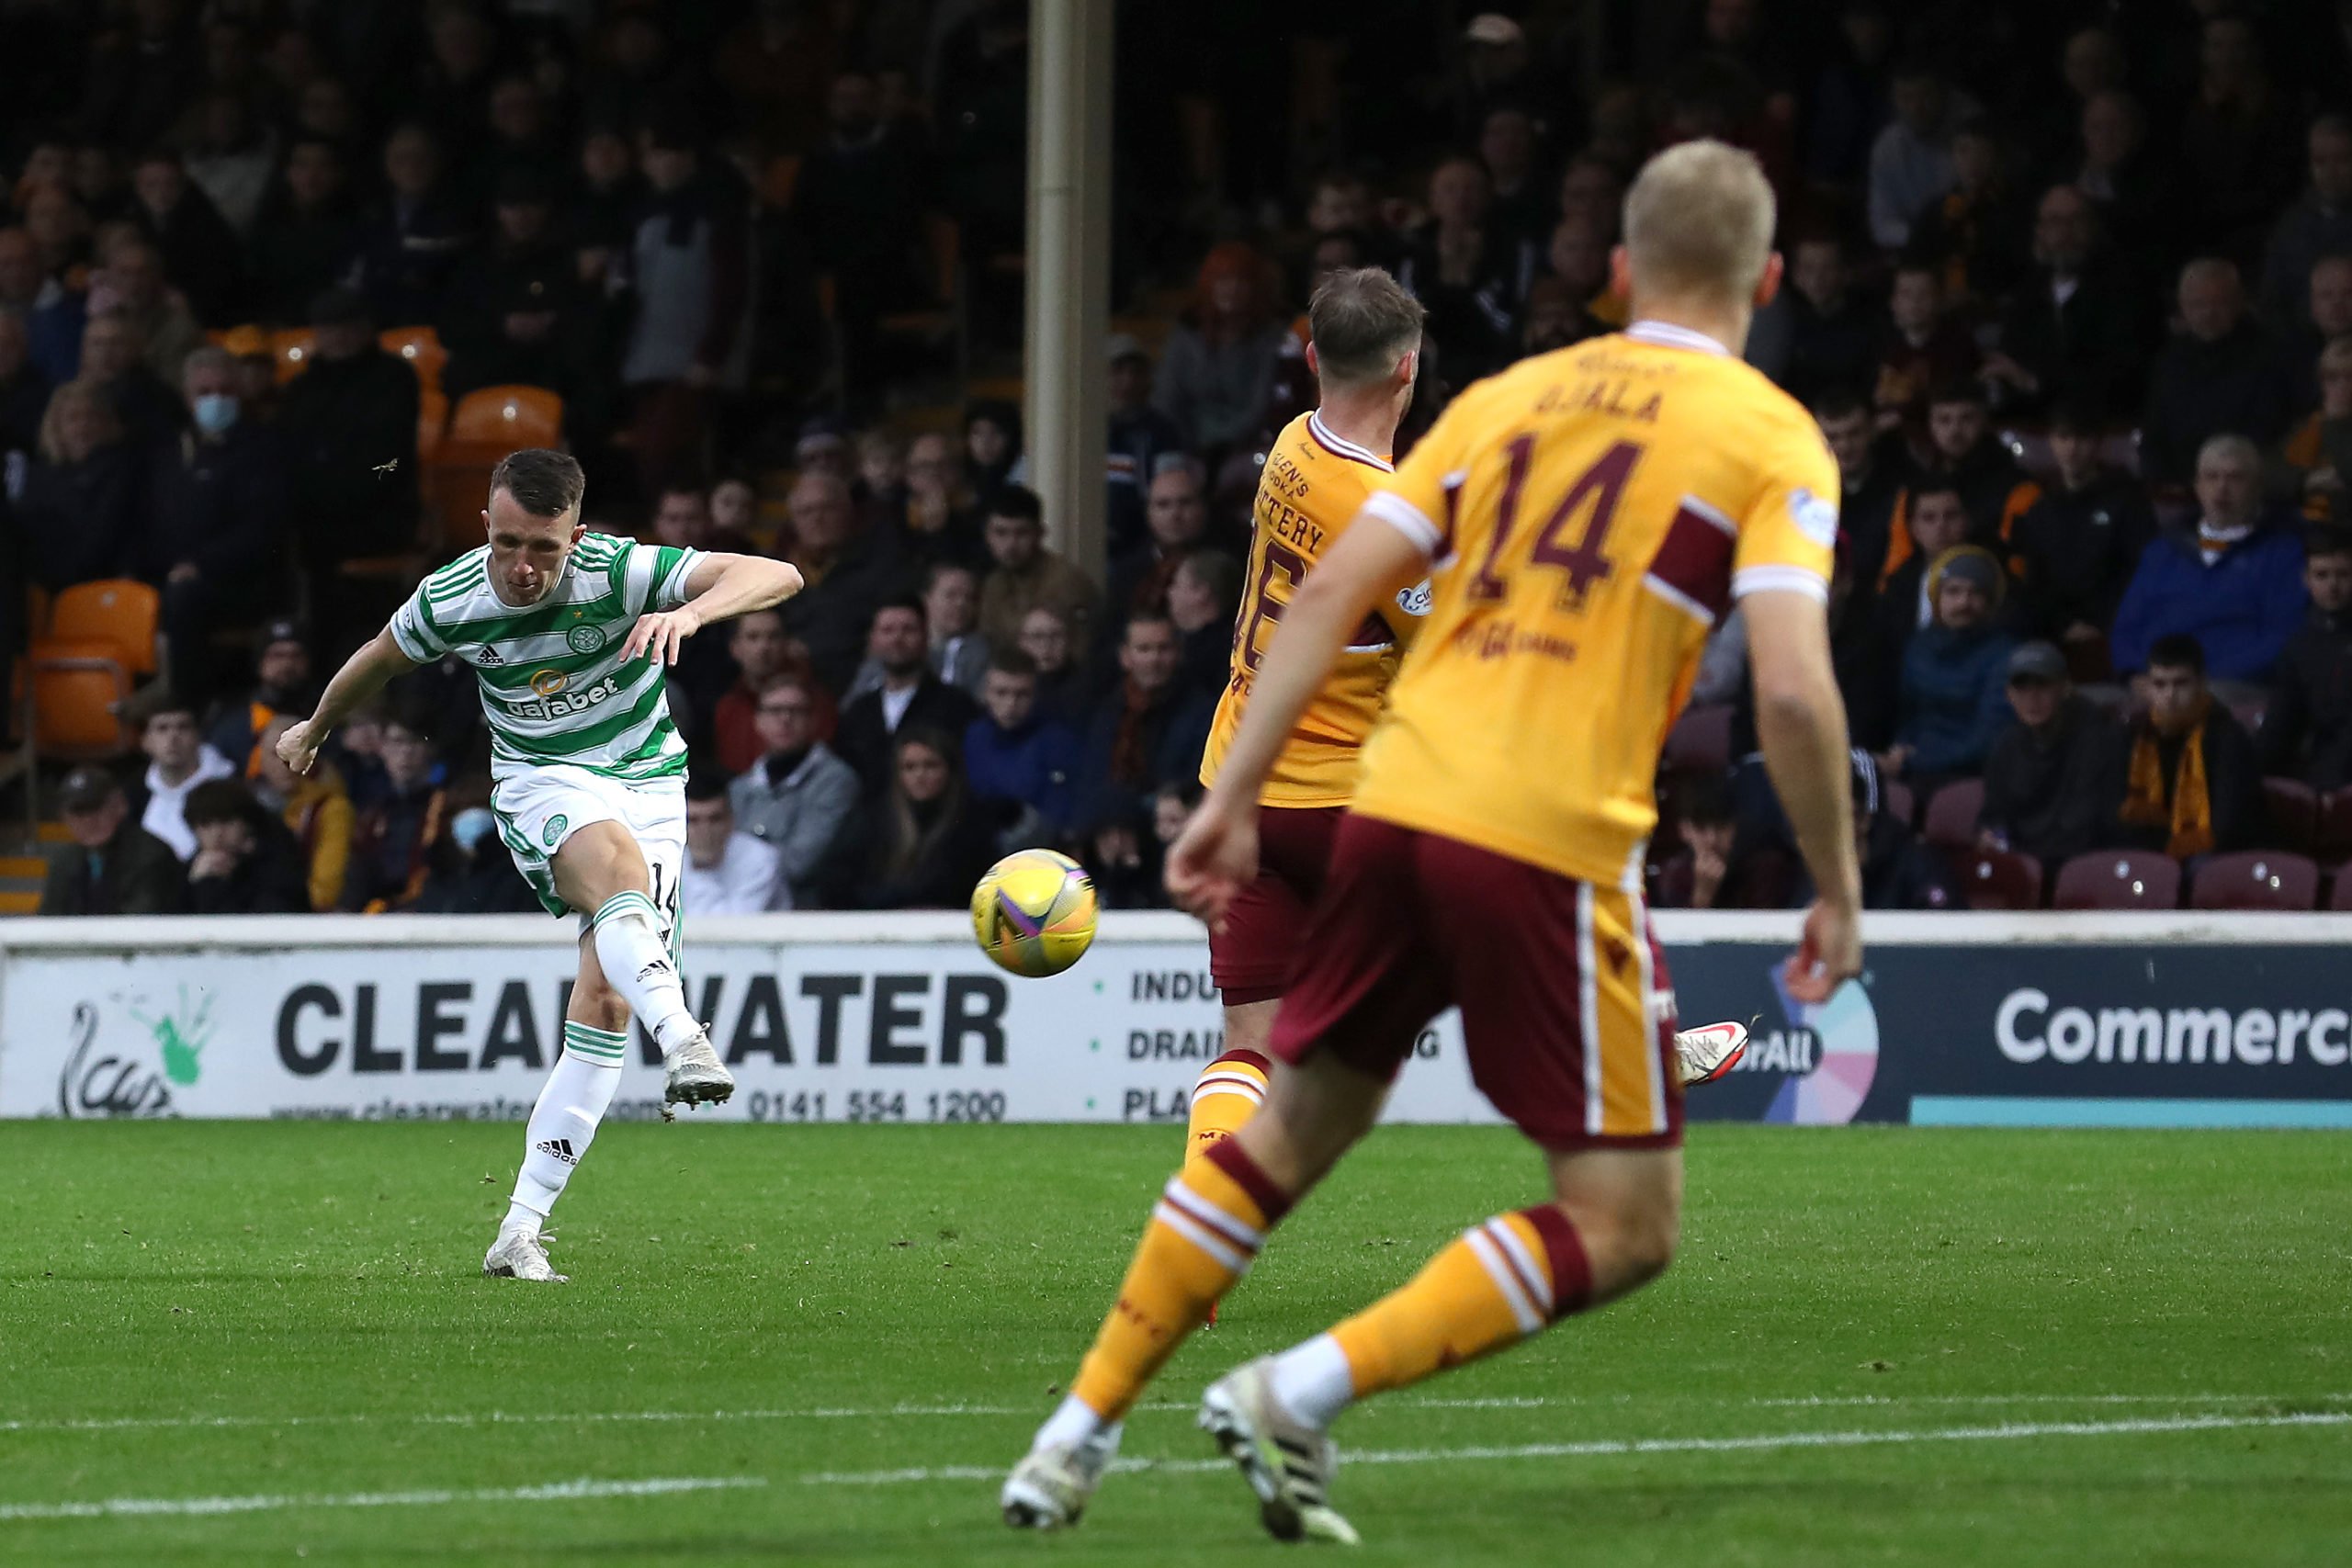 Celtic midfielder David Turnbull in action against Motherwell